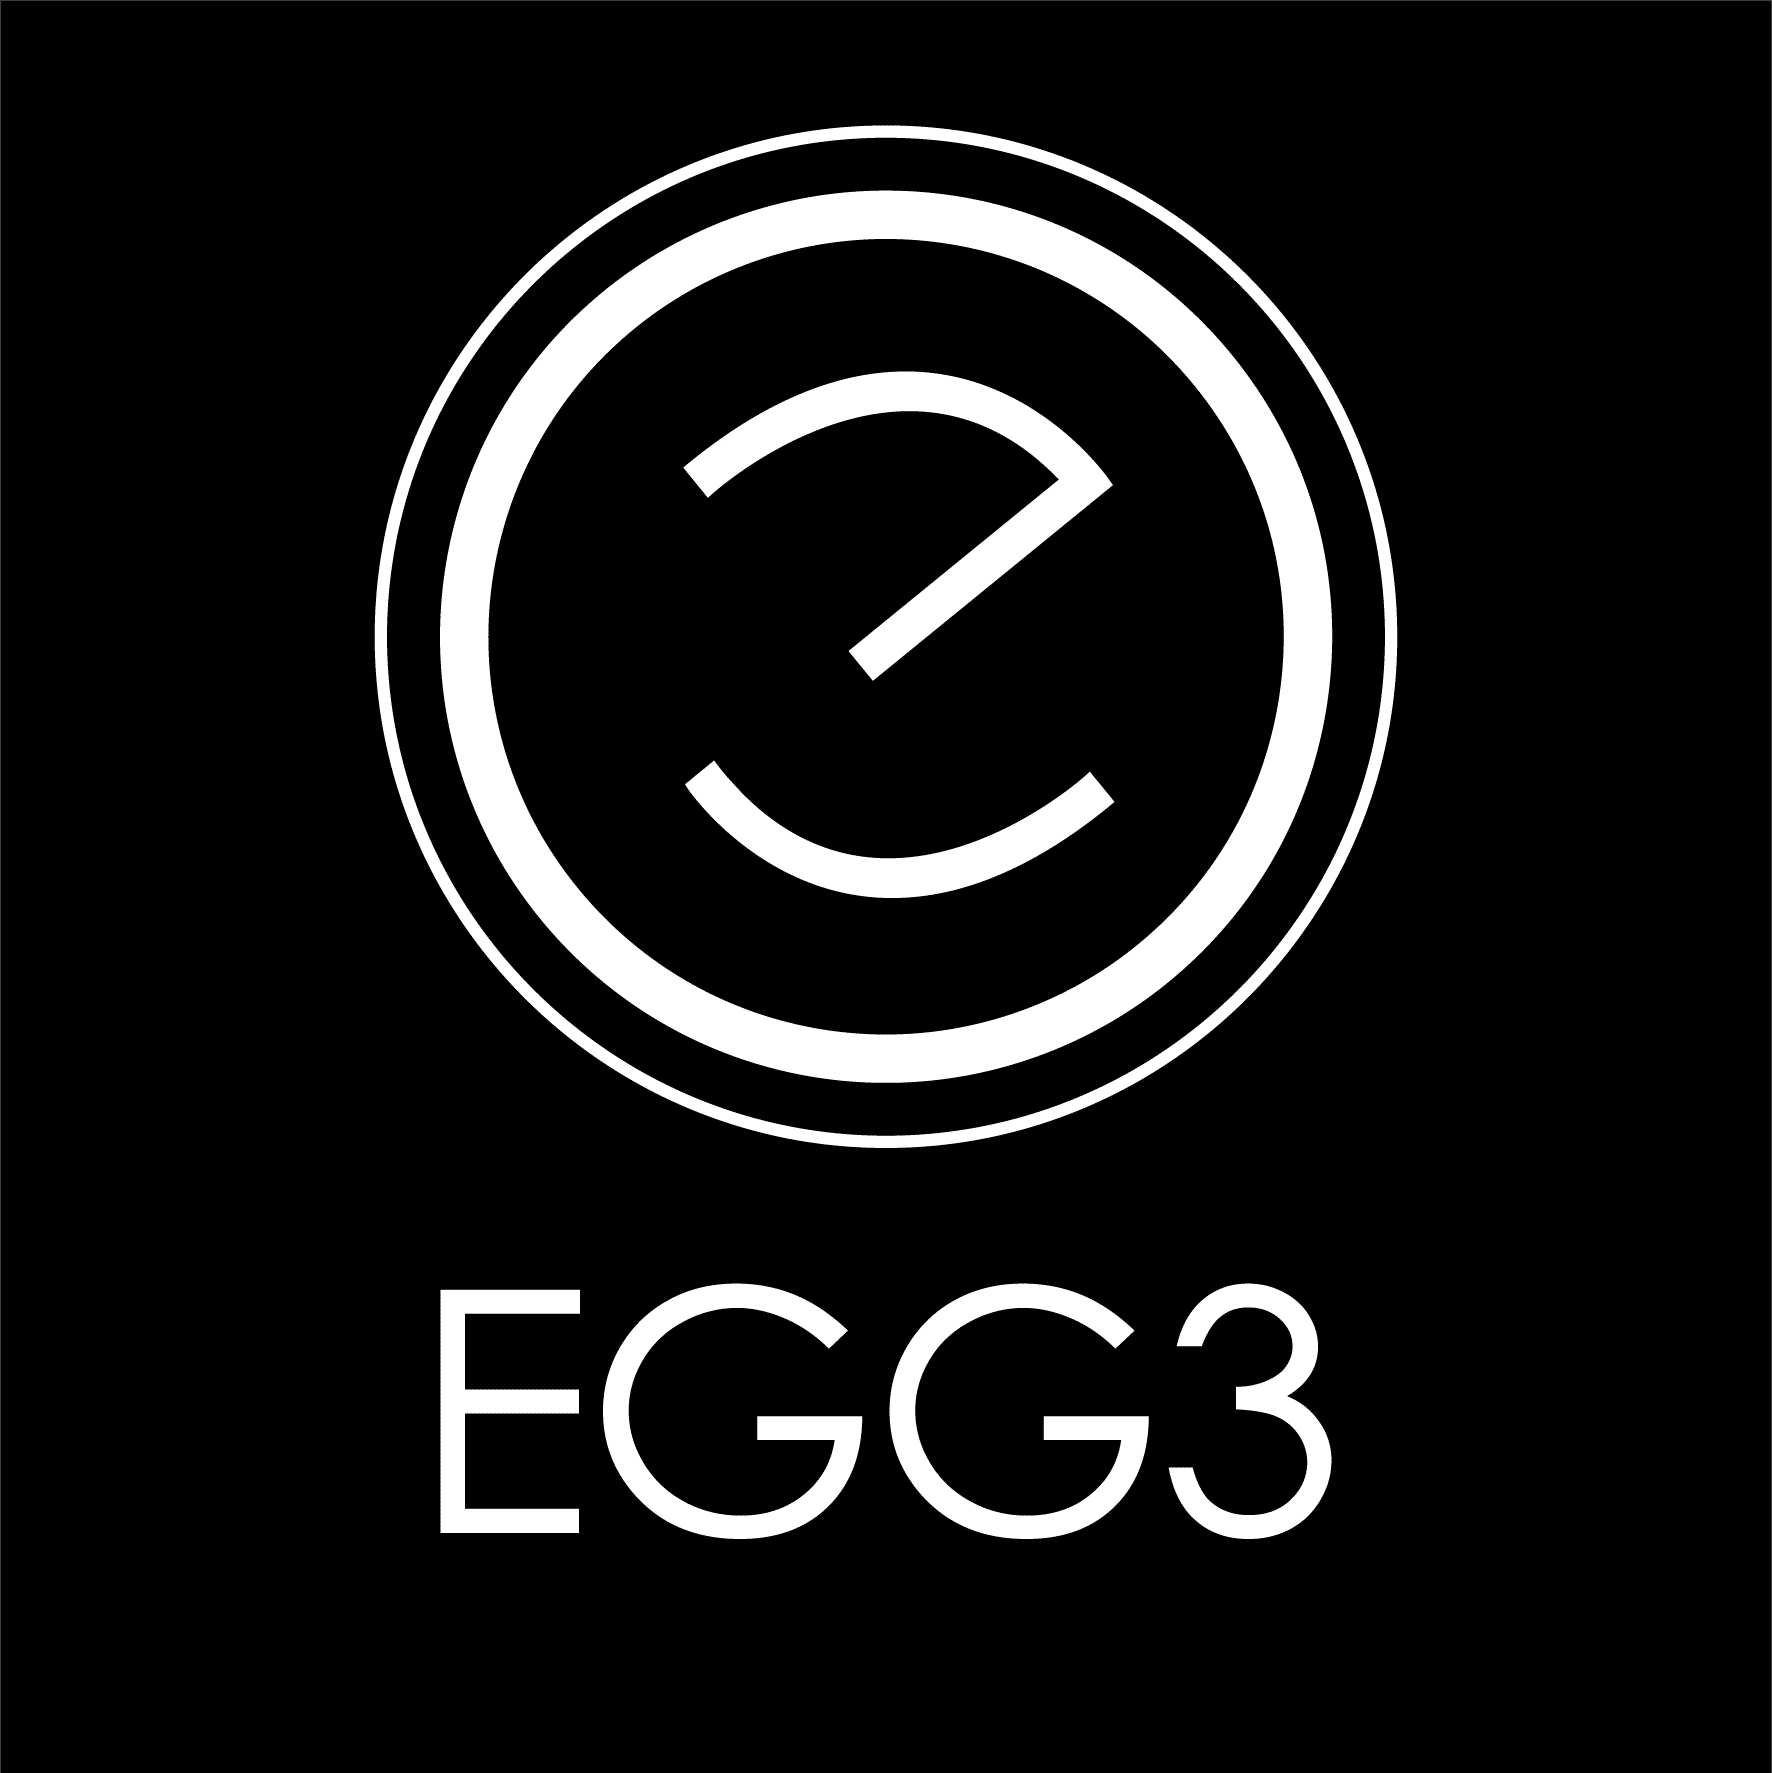 Egg3 logo Marketing